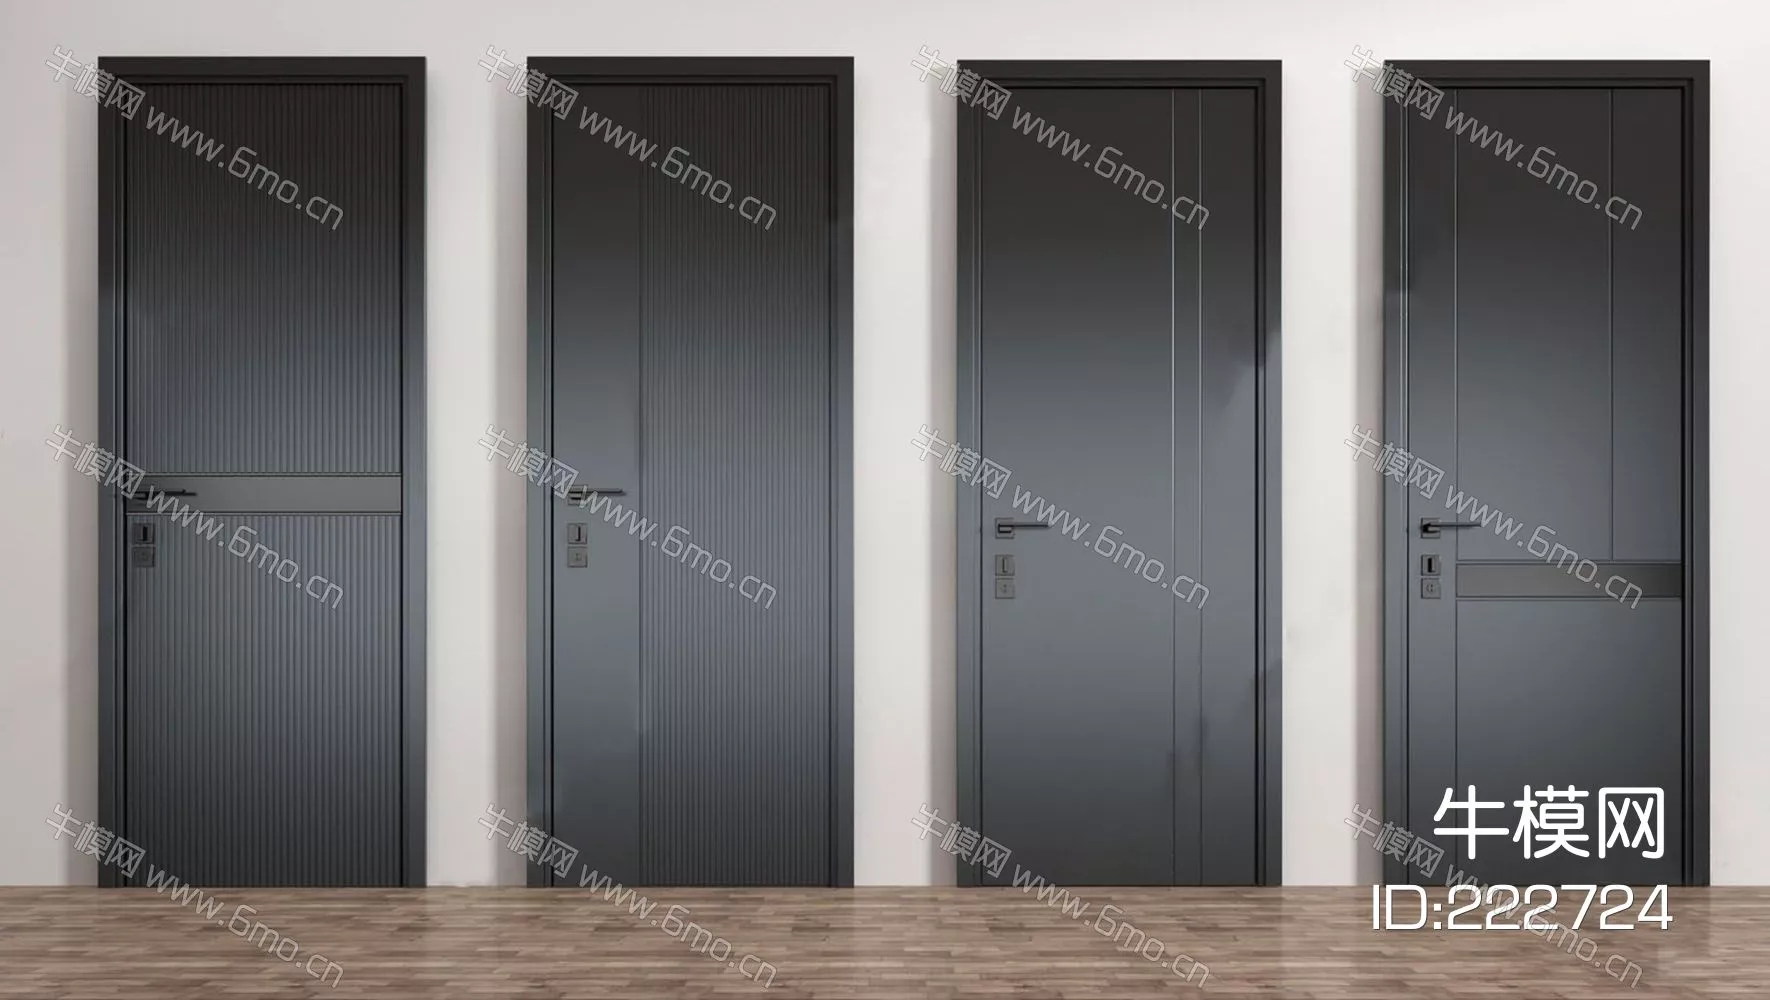 MODERN DOOR AND WINDOWS - SKETCHUP 3D MODEL - ENSCAPE - 222724